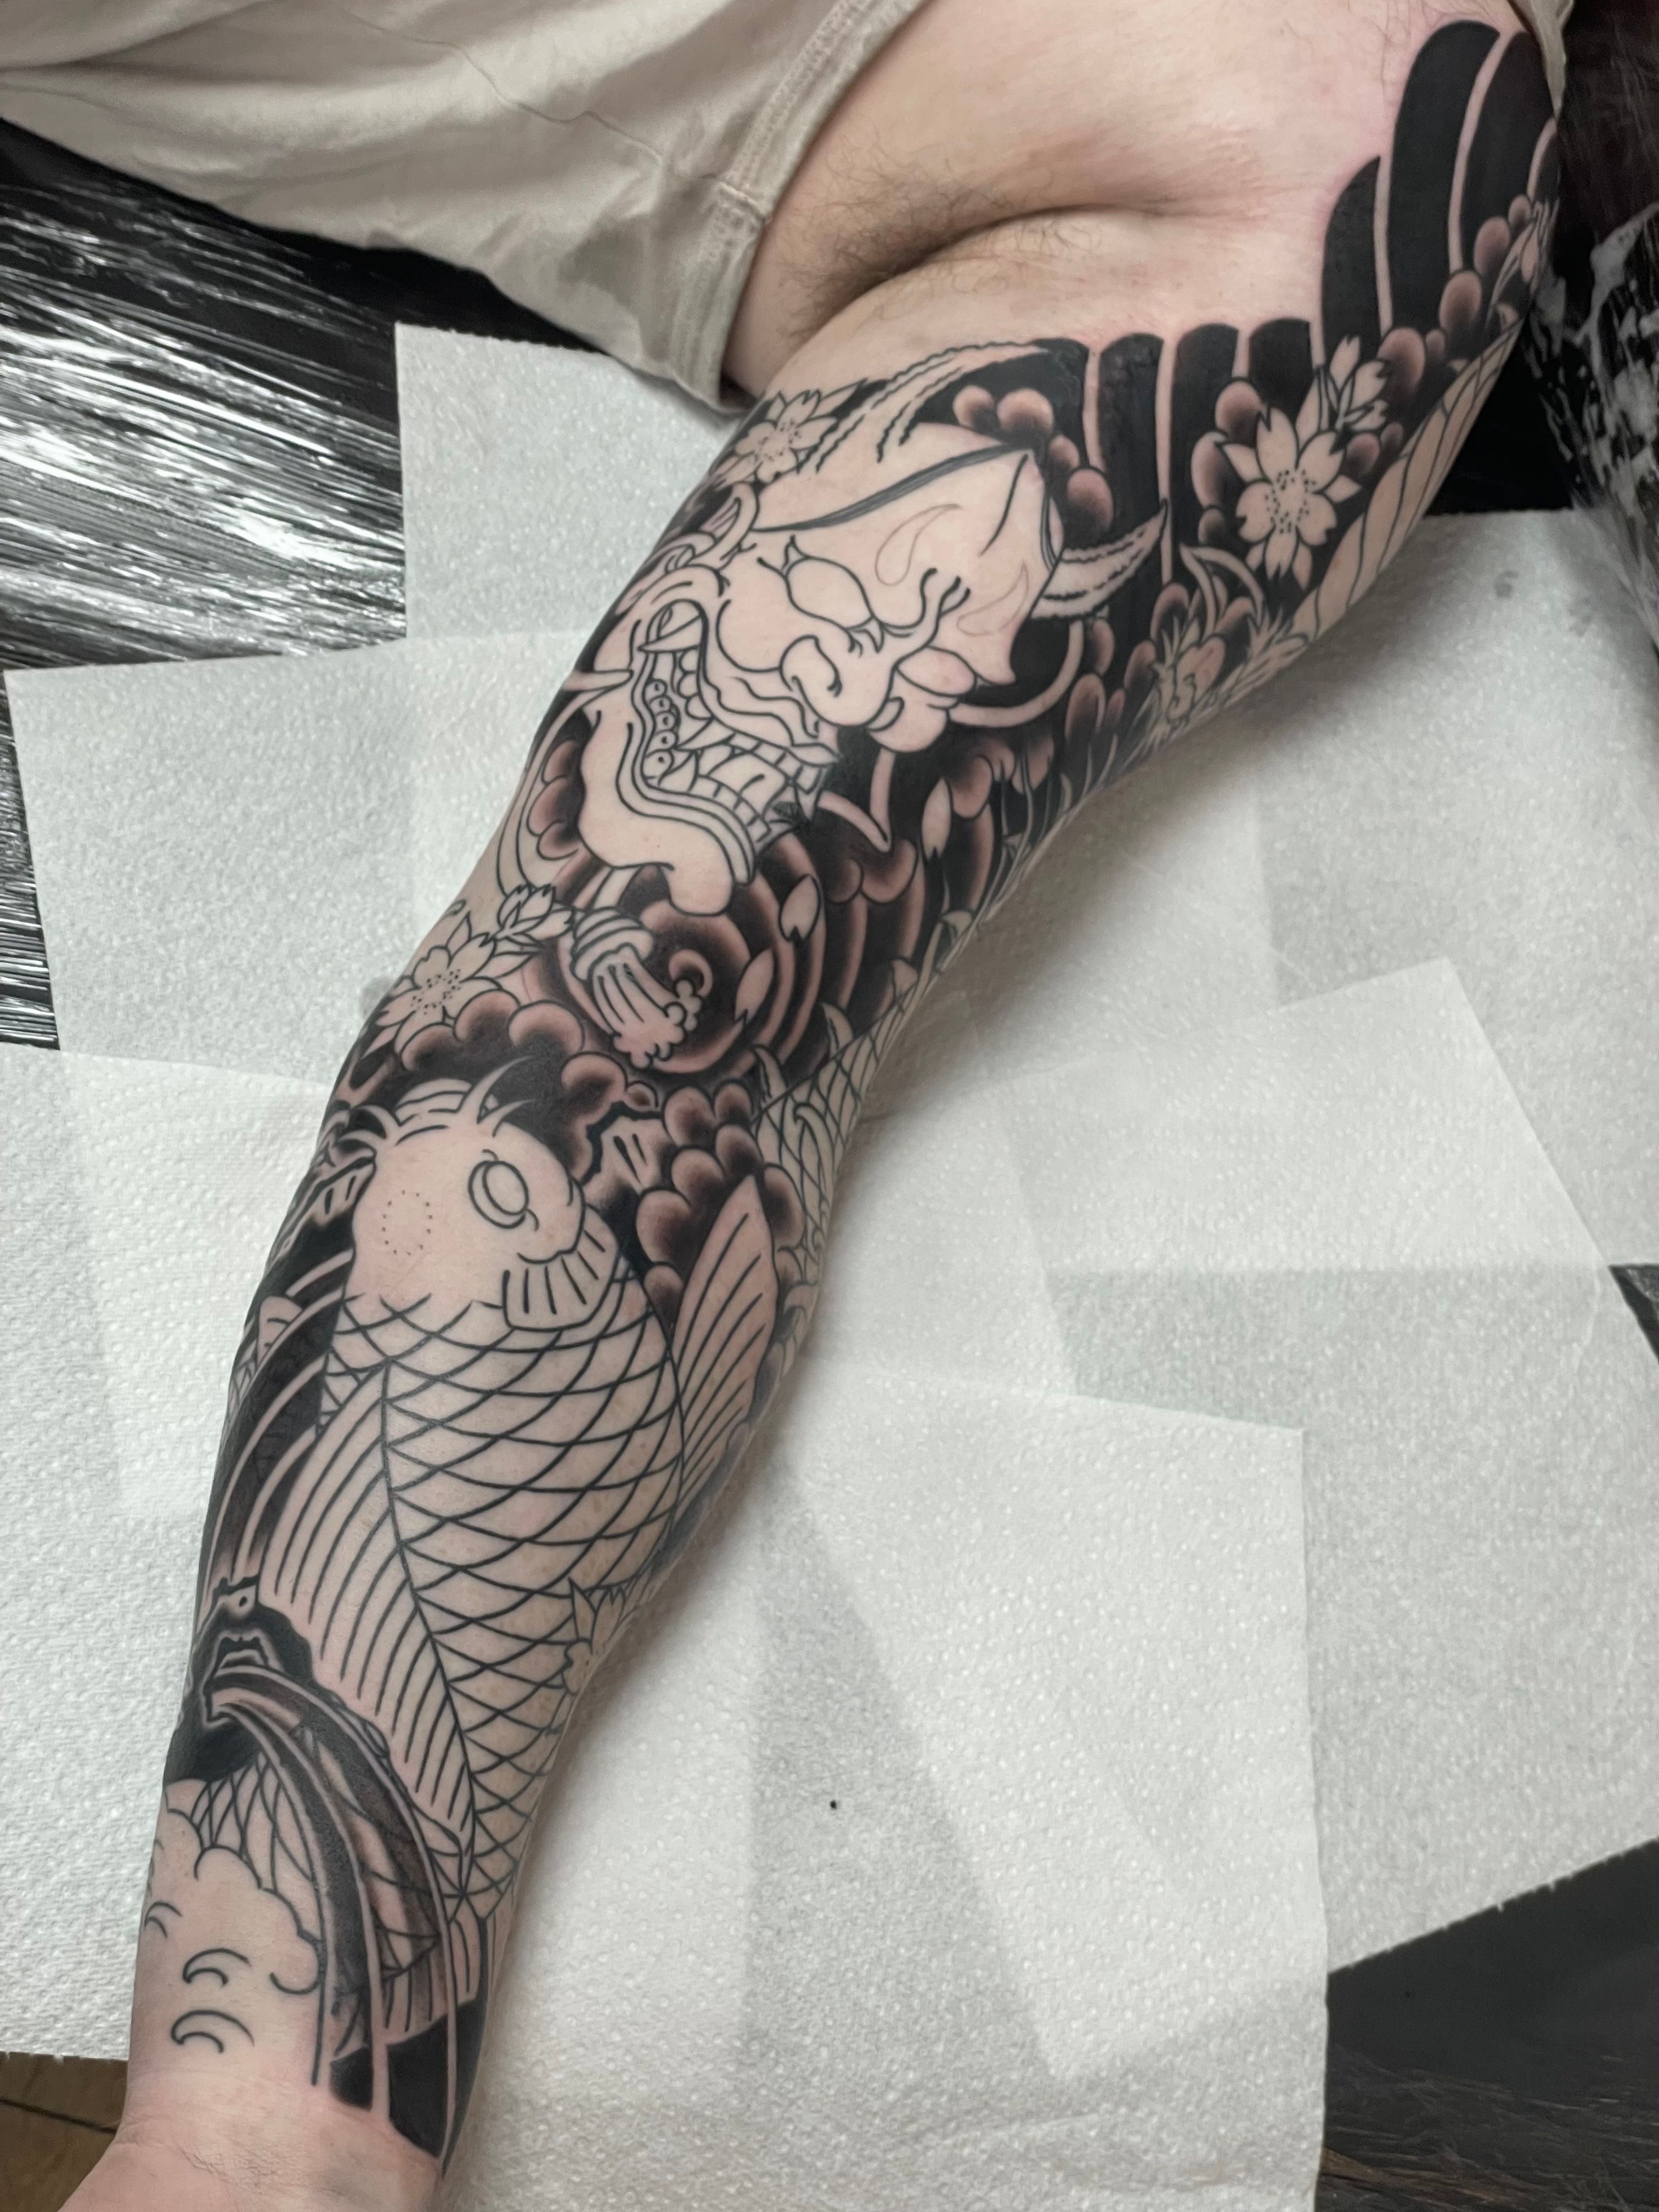 Tattoo - Koi fish and cherry blossoms by Xenija88 on DeviantArt